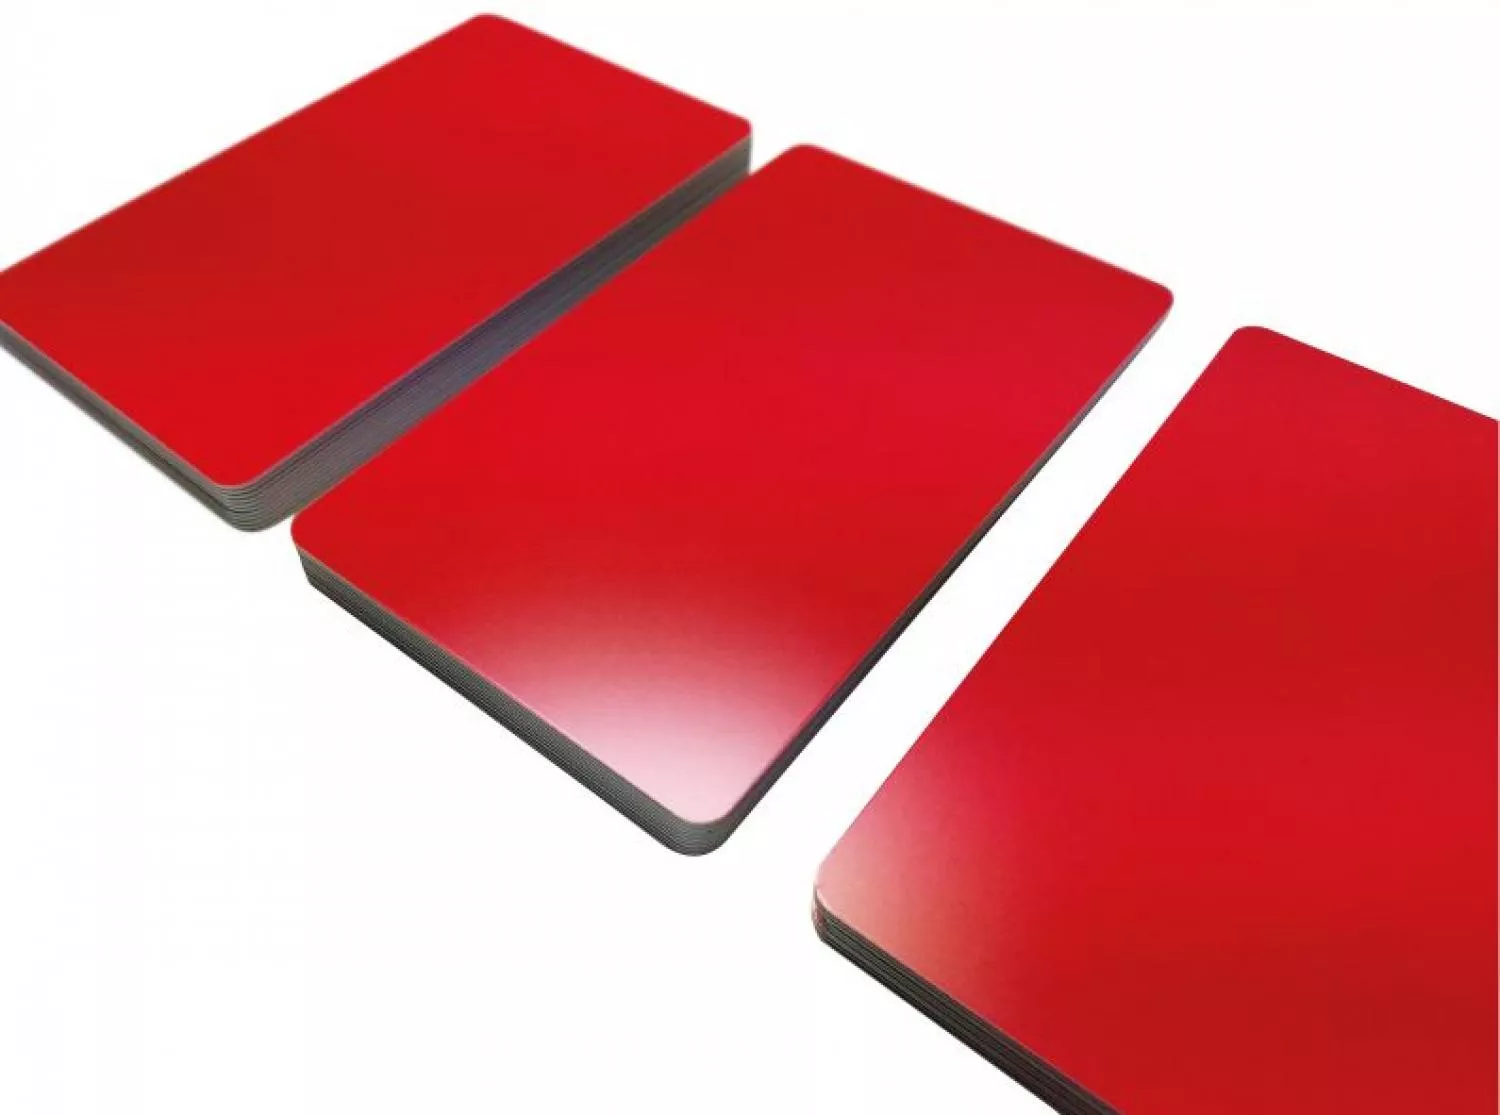 plastic card red matt finish thin